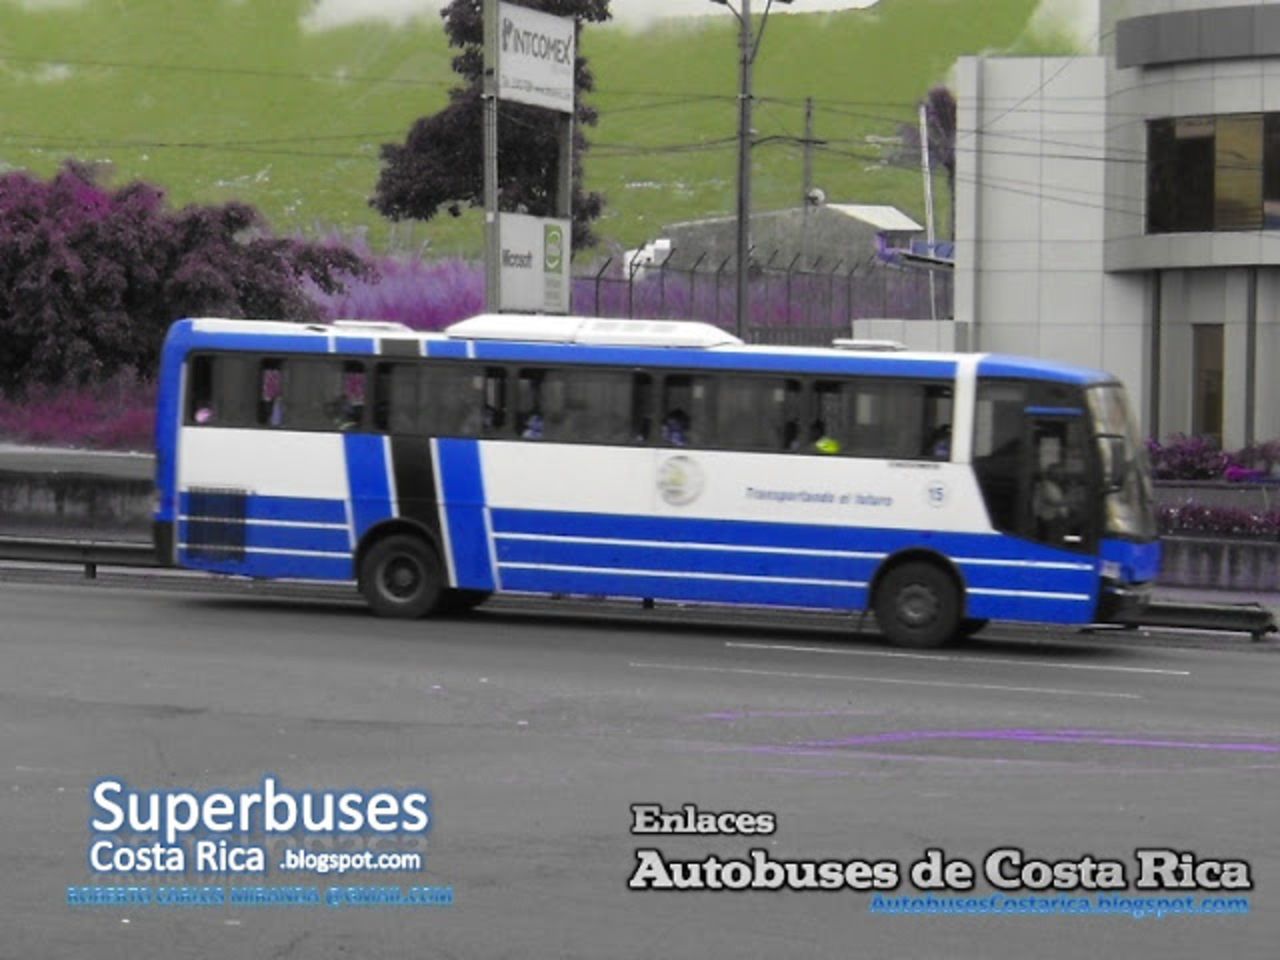 Enlaces Autobuses de Costa Rica: AutobÃºs Volksbus busscar ElBuss340